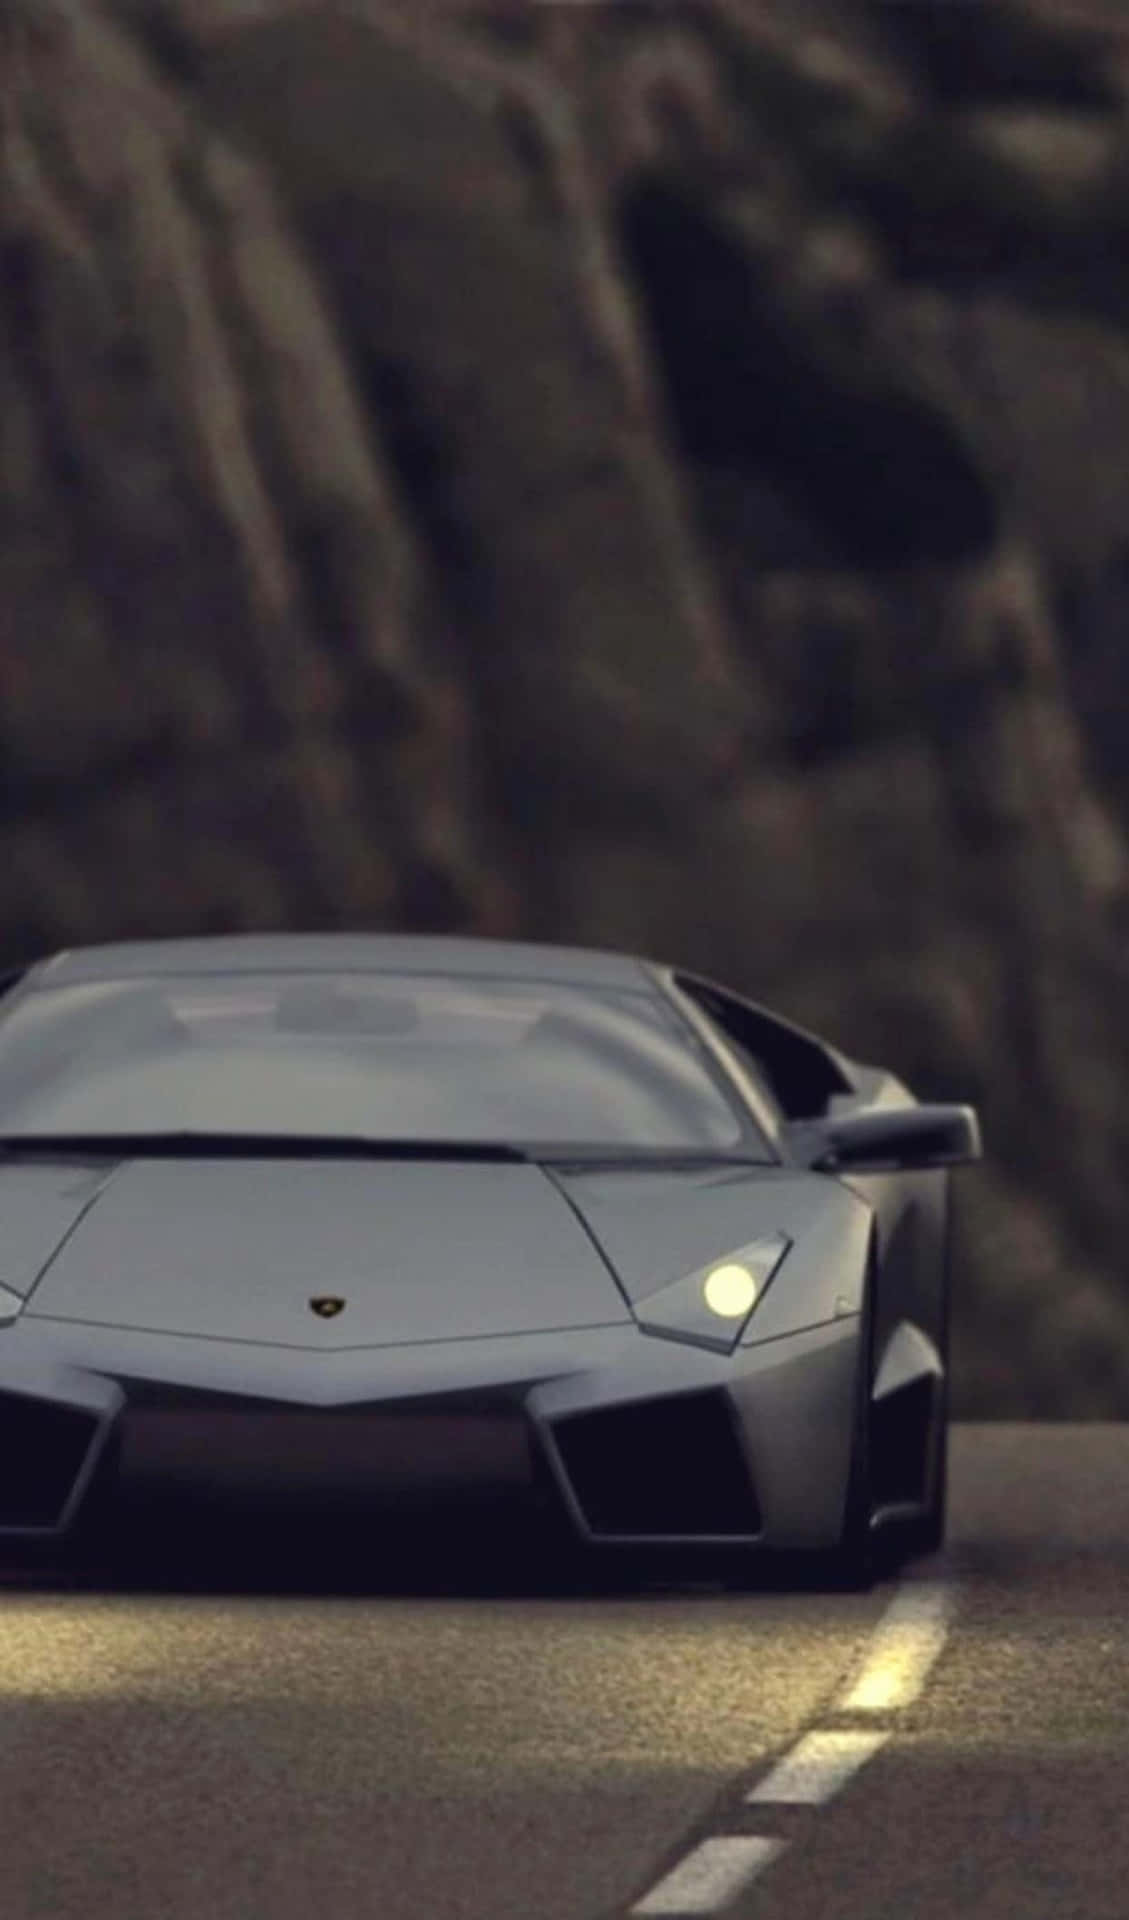 The Luxurious Black Lamborghini, a Symbol of Status and Wealth Wallpaper